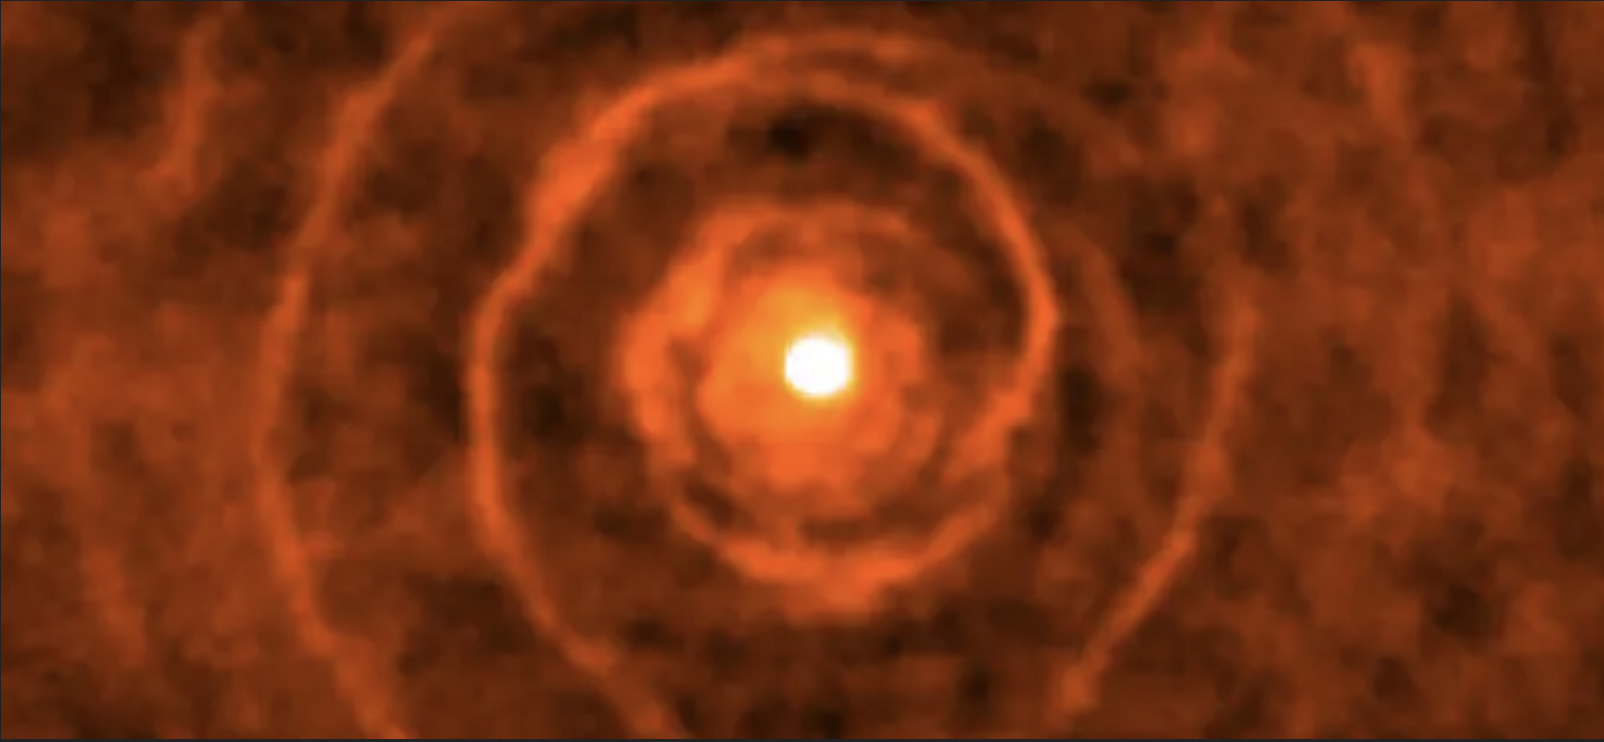 Surprising spiral pattern hints at ‘elliptical’ binary